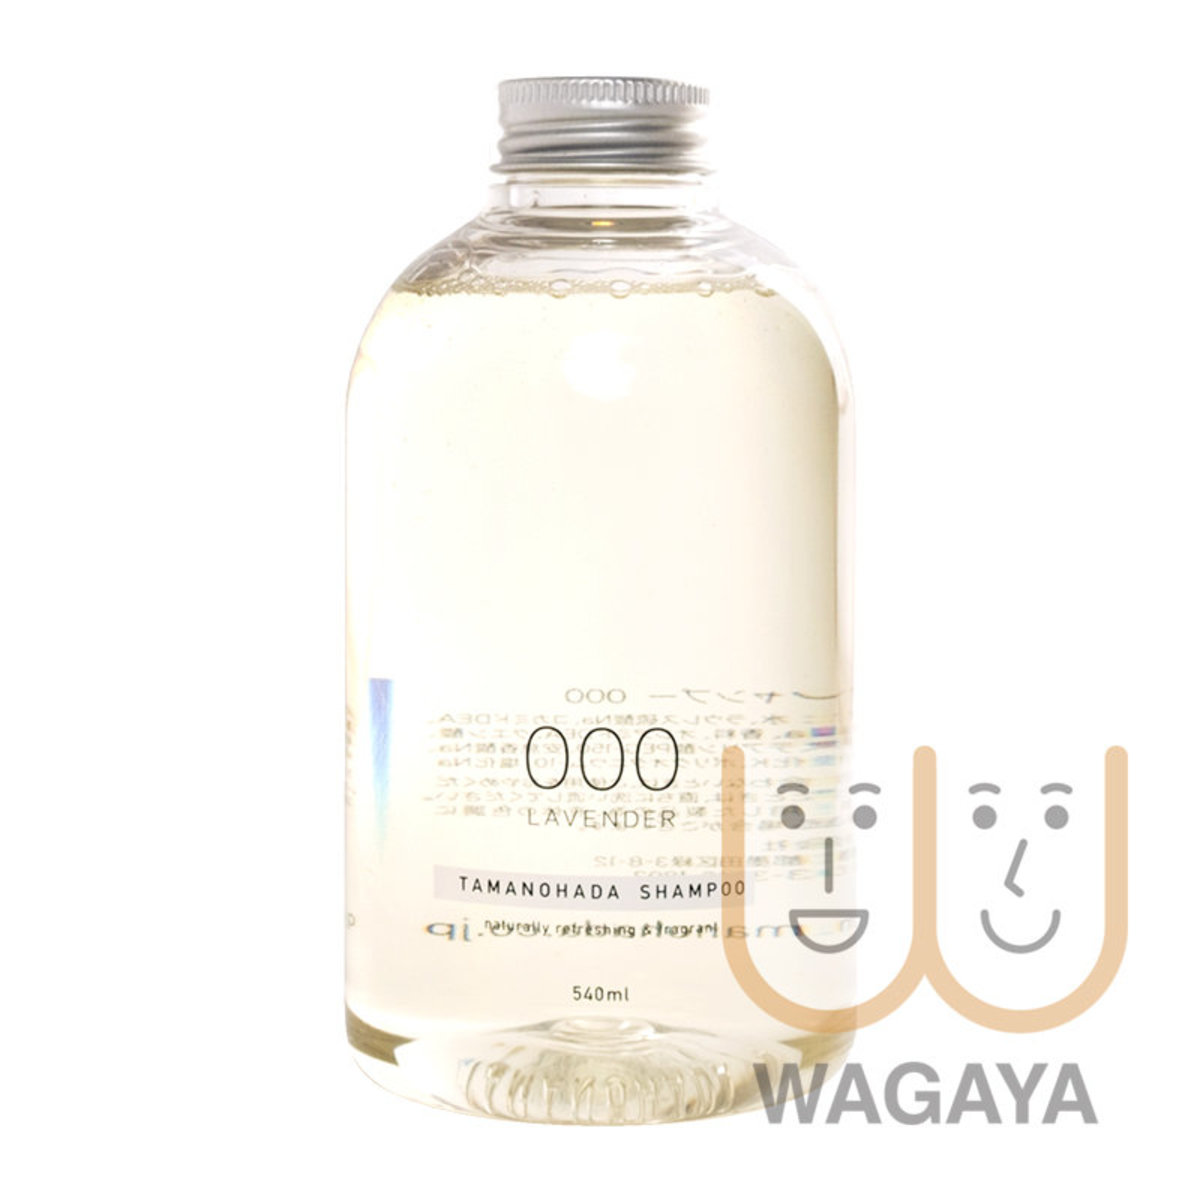 000 Lavender Shampoo 540ml (207009) (Parallel Import)